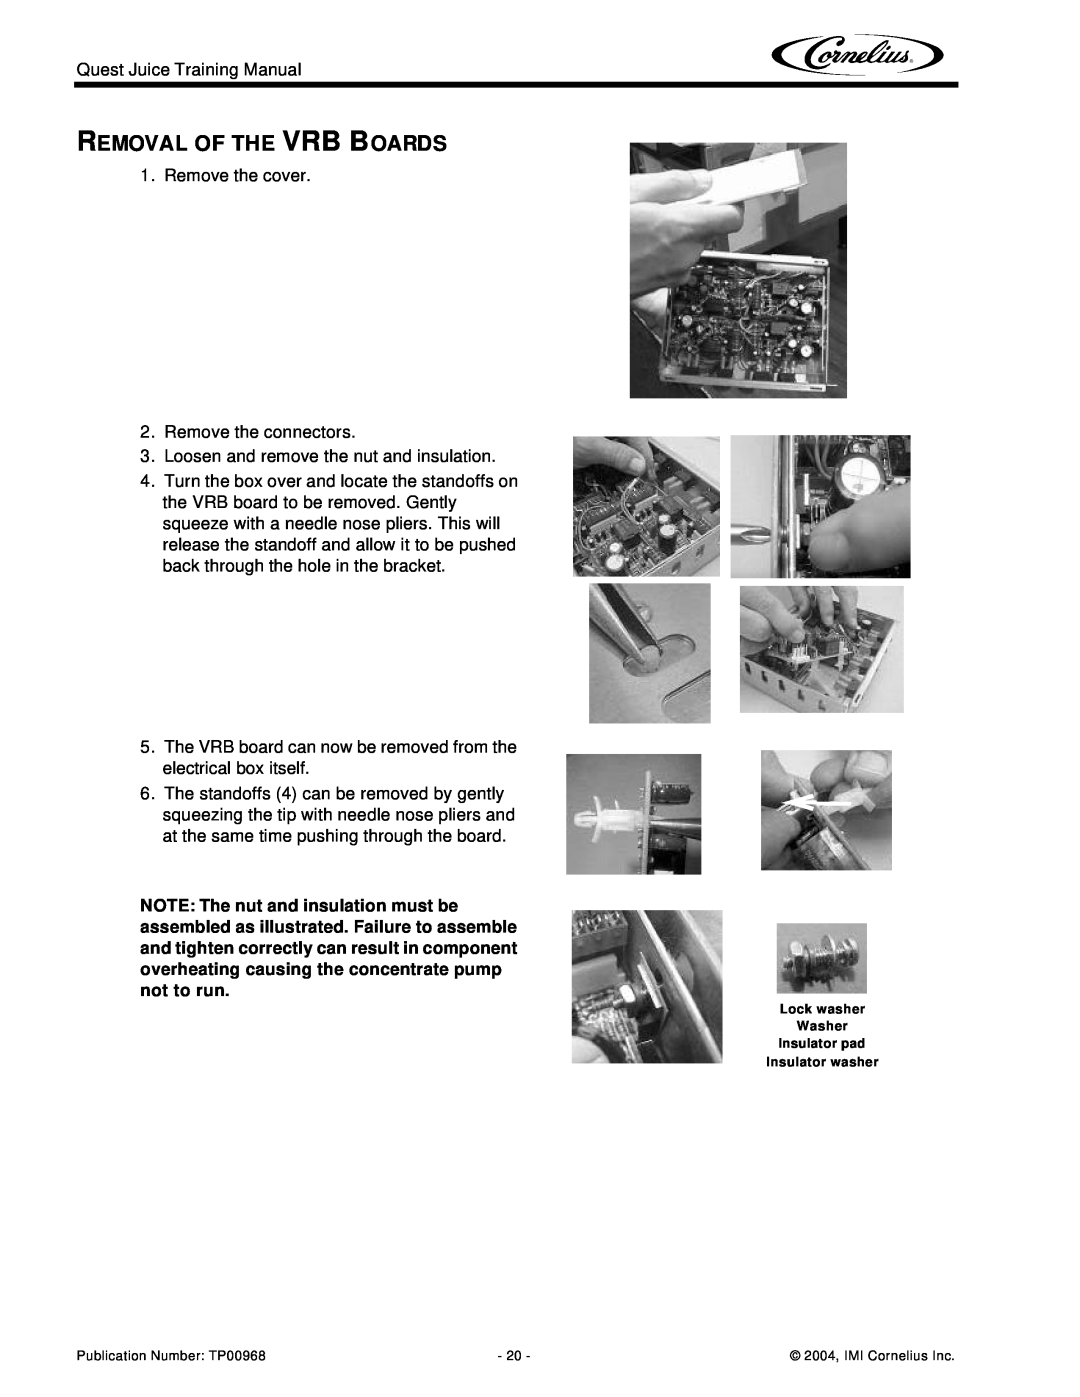 Cornelius 4 Flavor, 2 Flavor manual Removal Of The Vrb Boards, Lock washer Washer Insulator pad Insulator washer 